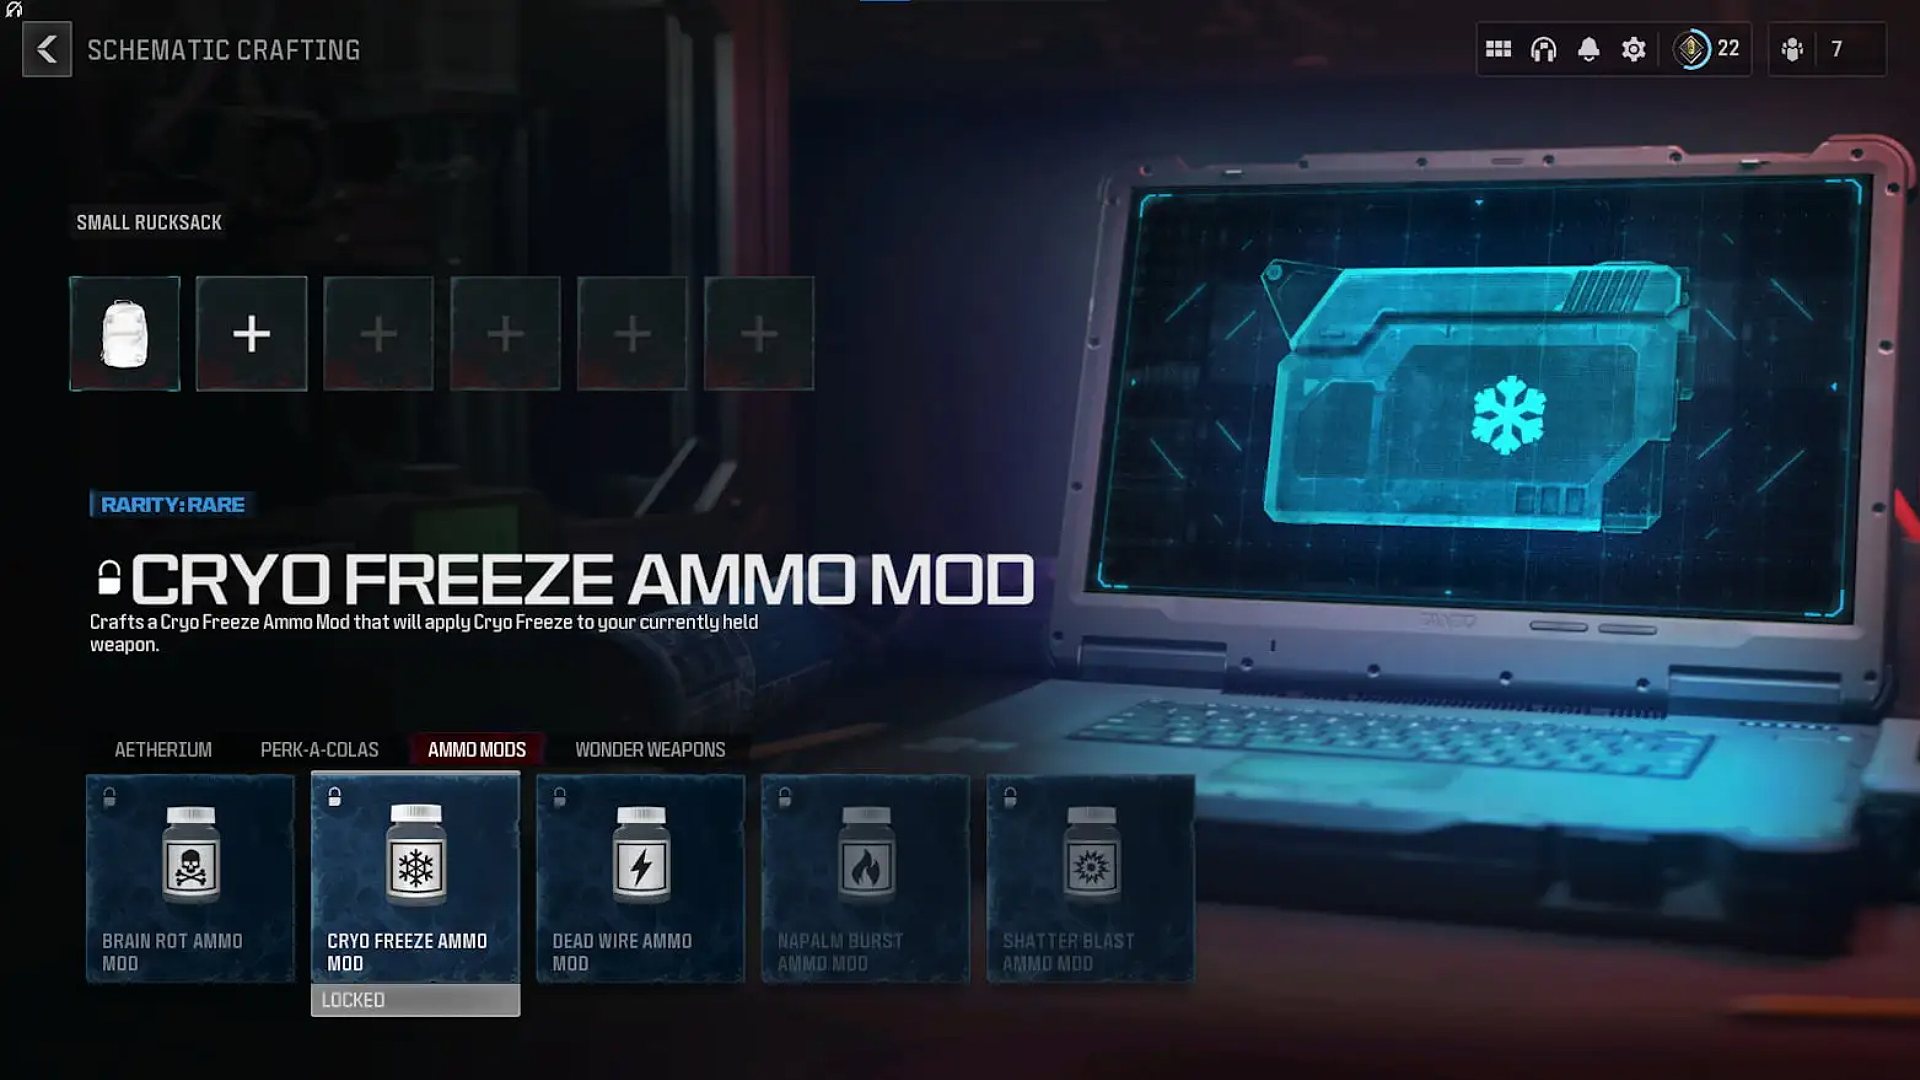 The Cryo Freeze Ammo Mod in MW3 Zombies